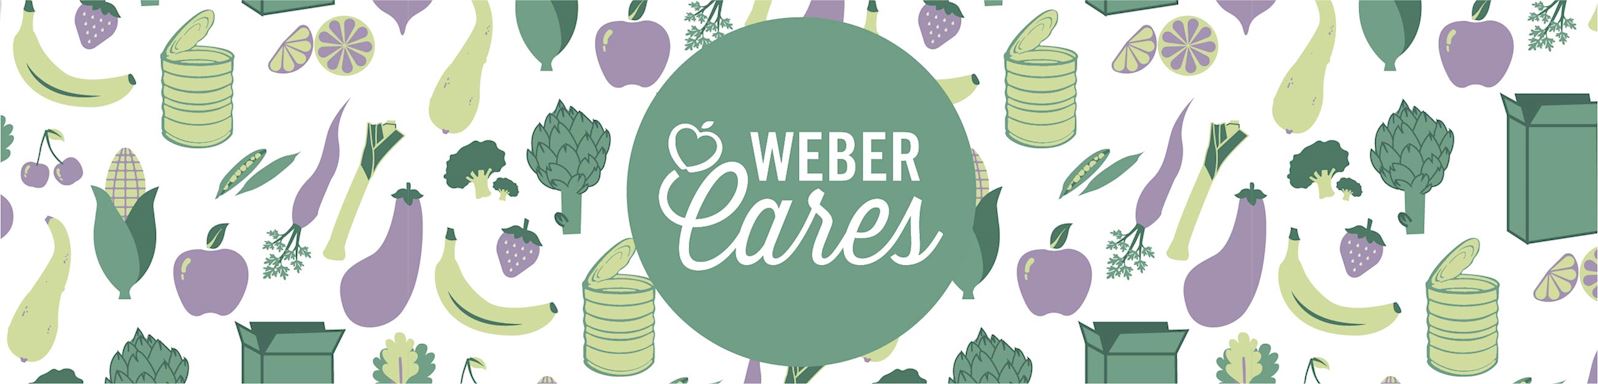 Weber Cares Pantry